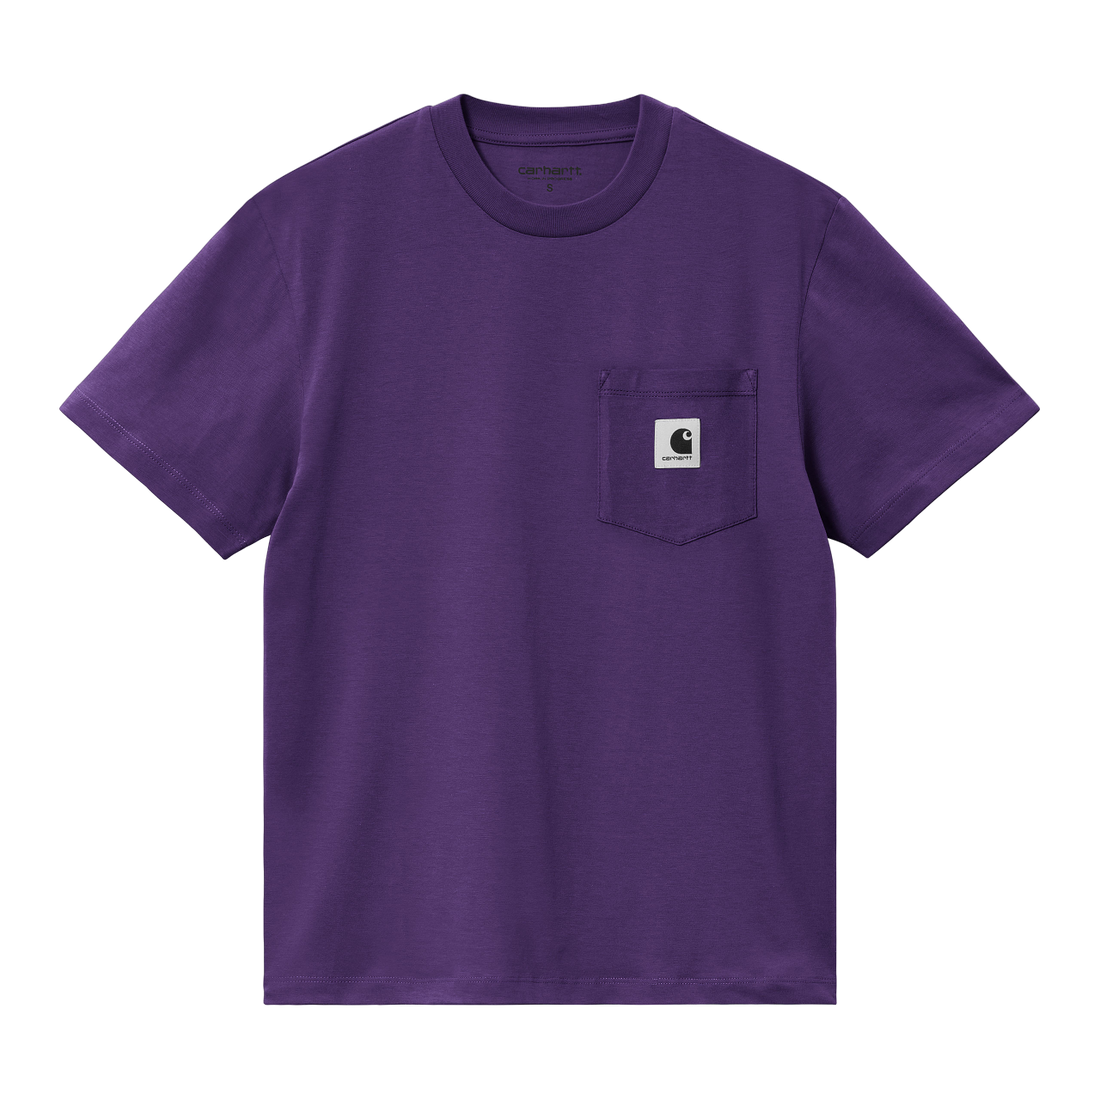 Carhartt W' S/S Pocket T-Shirt Tyrian